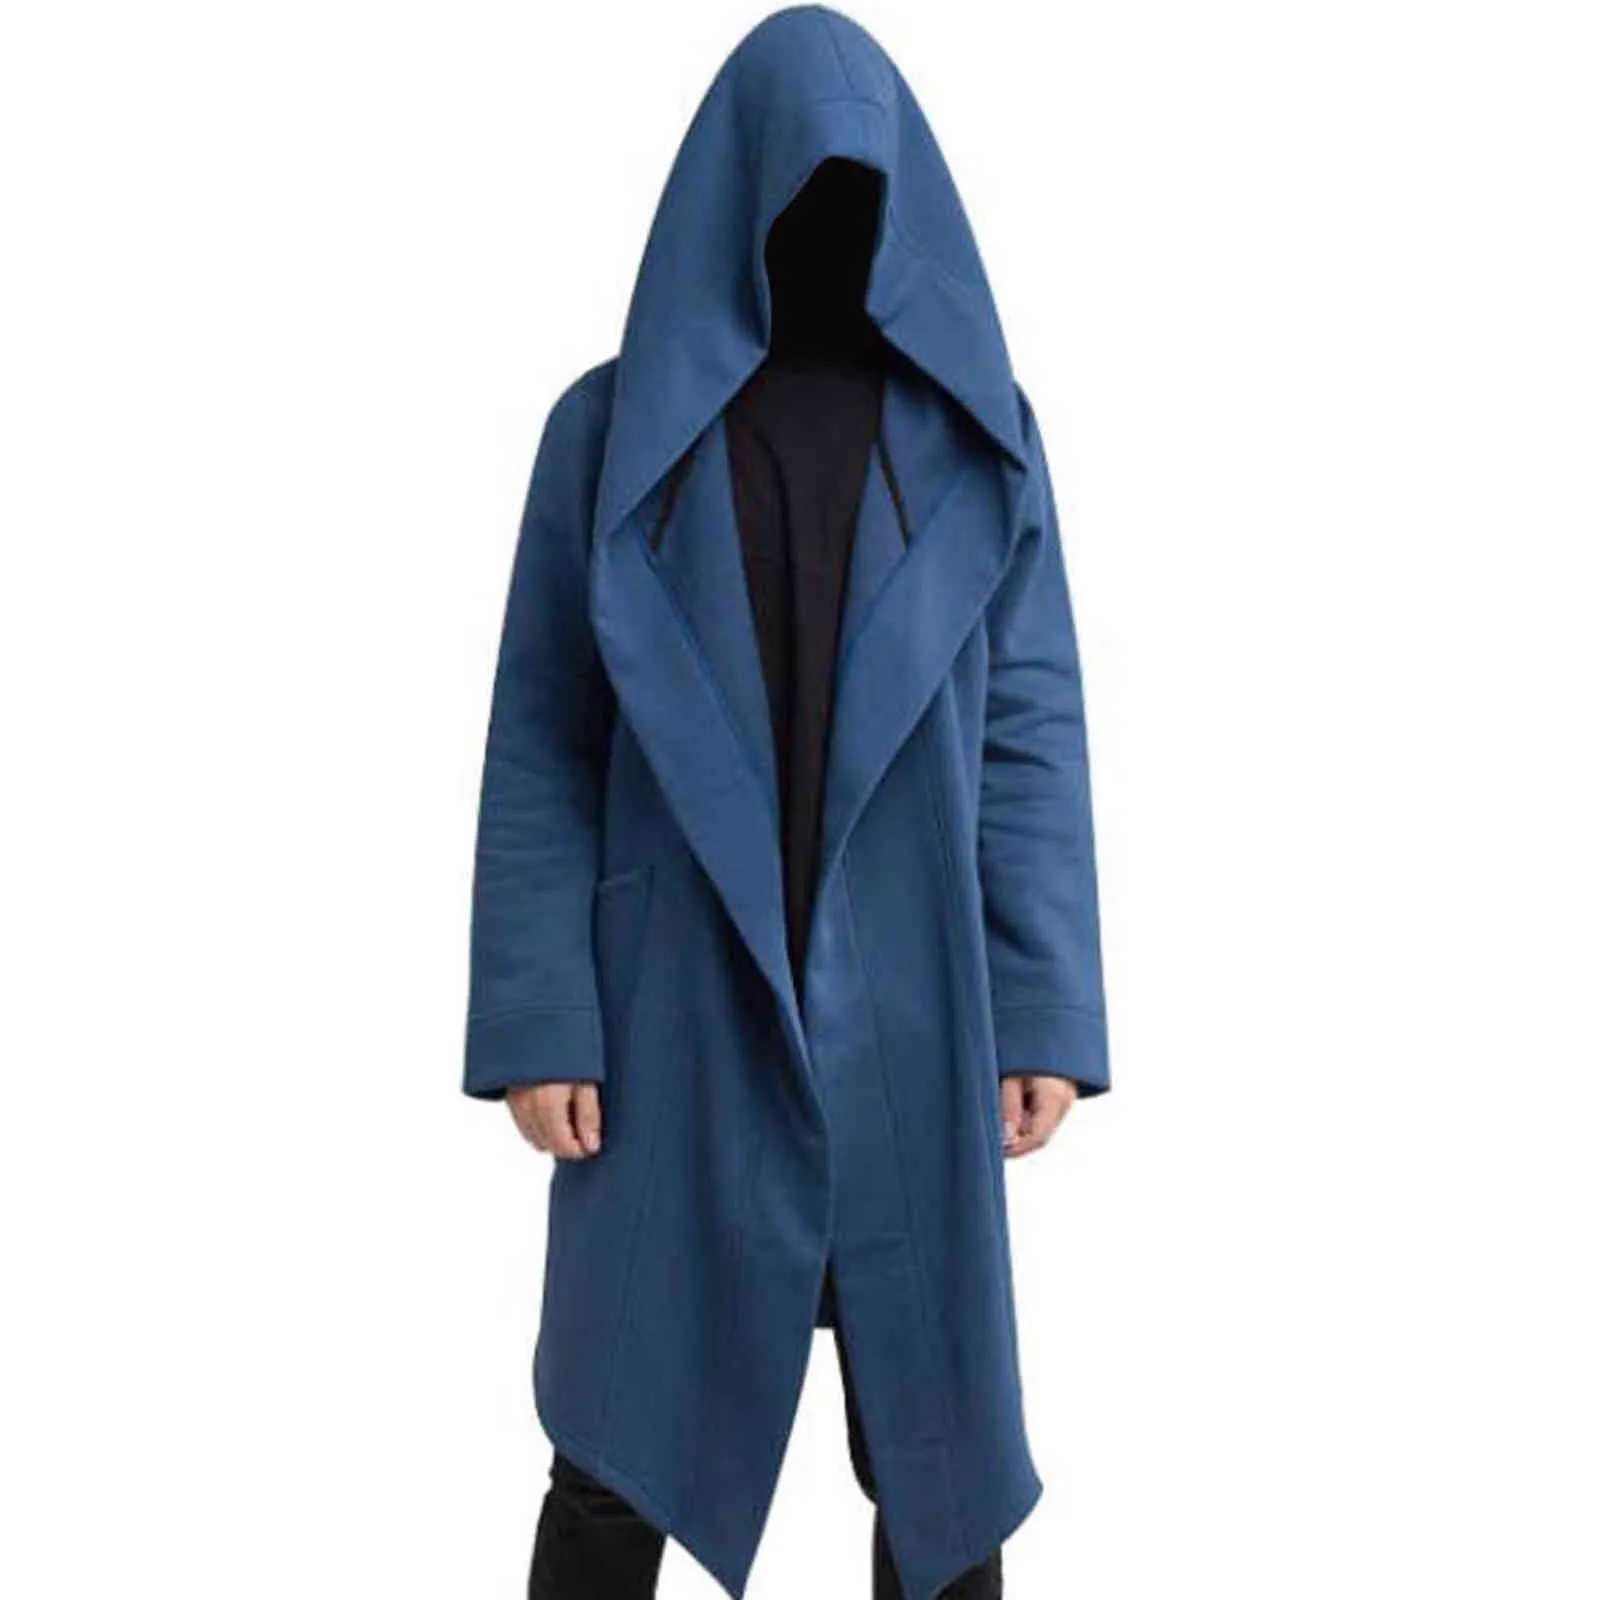 Mens Robe Hooded Cloak Winter Mode Losse Pocket Warmer Jas Lange Mouwen Casual Comfy Warm Uitloper Y1106